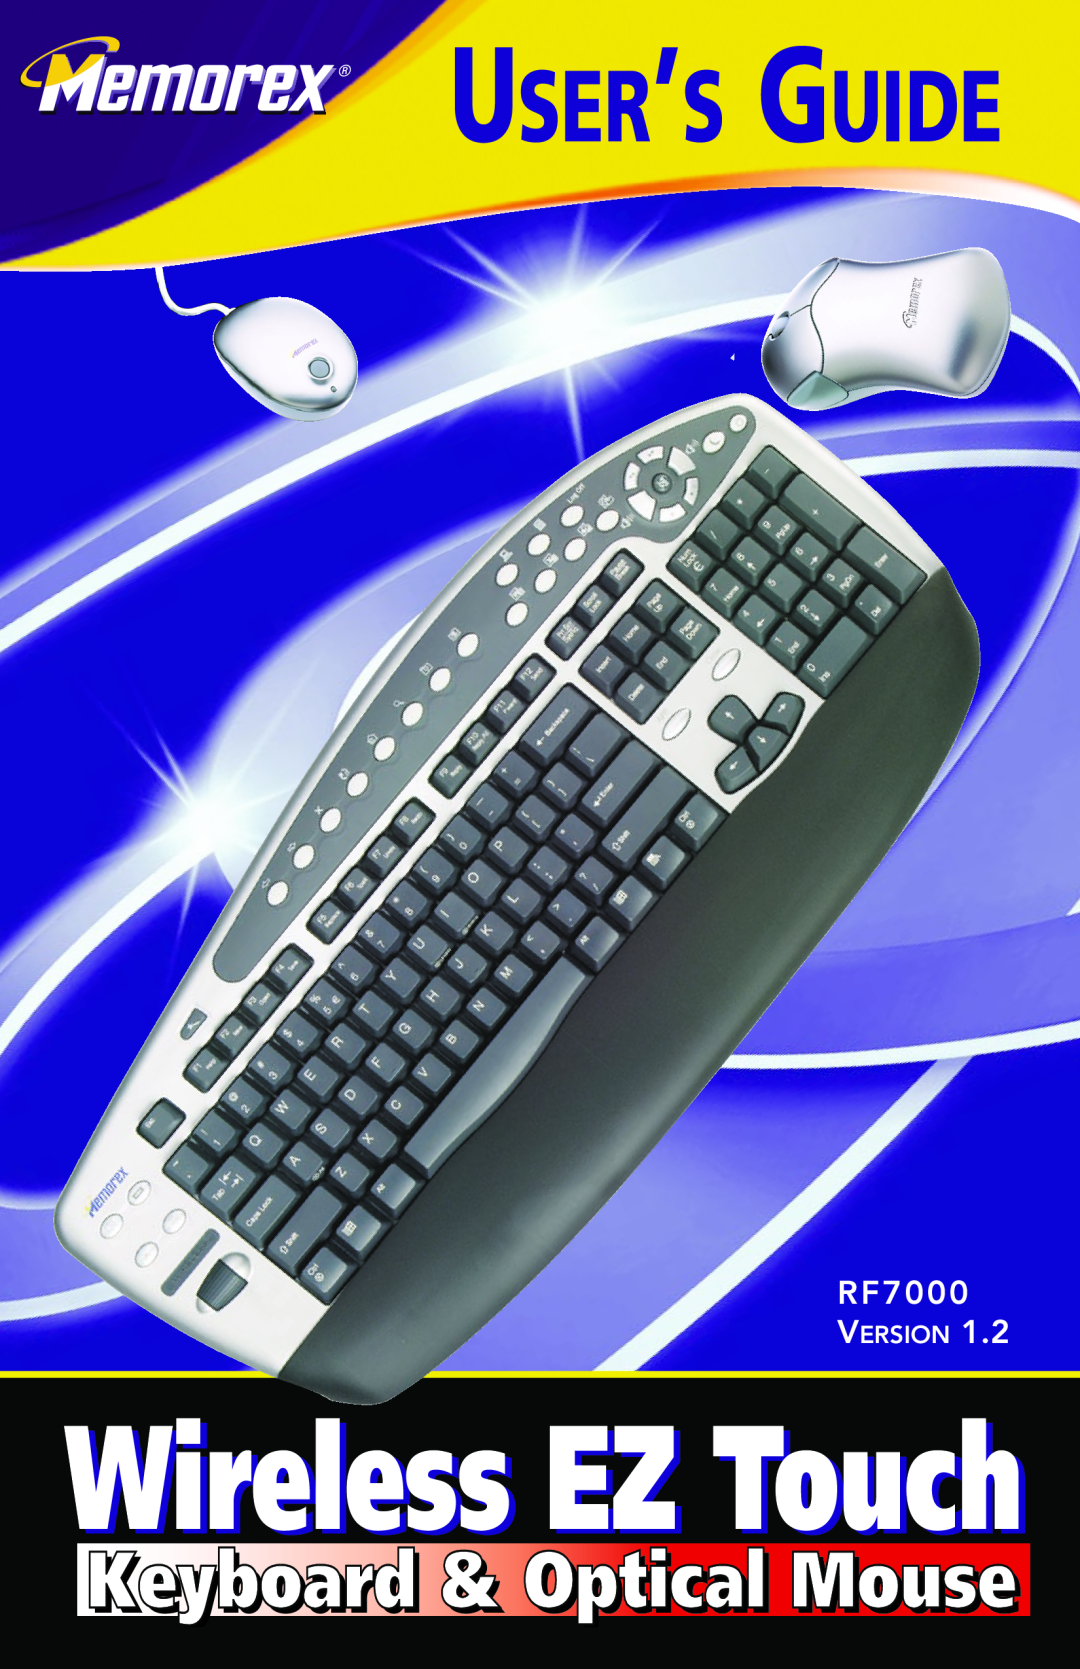 Memorex RF7000 manual Wireless EZ Touch, Keyboard & Optical Mouse, Uuserser’’Ss Gguideuide, Version 